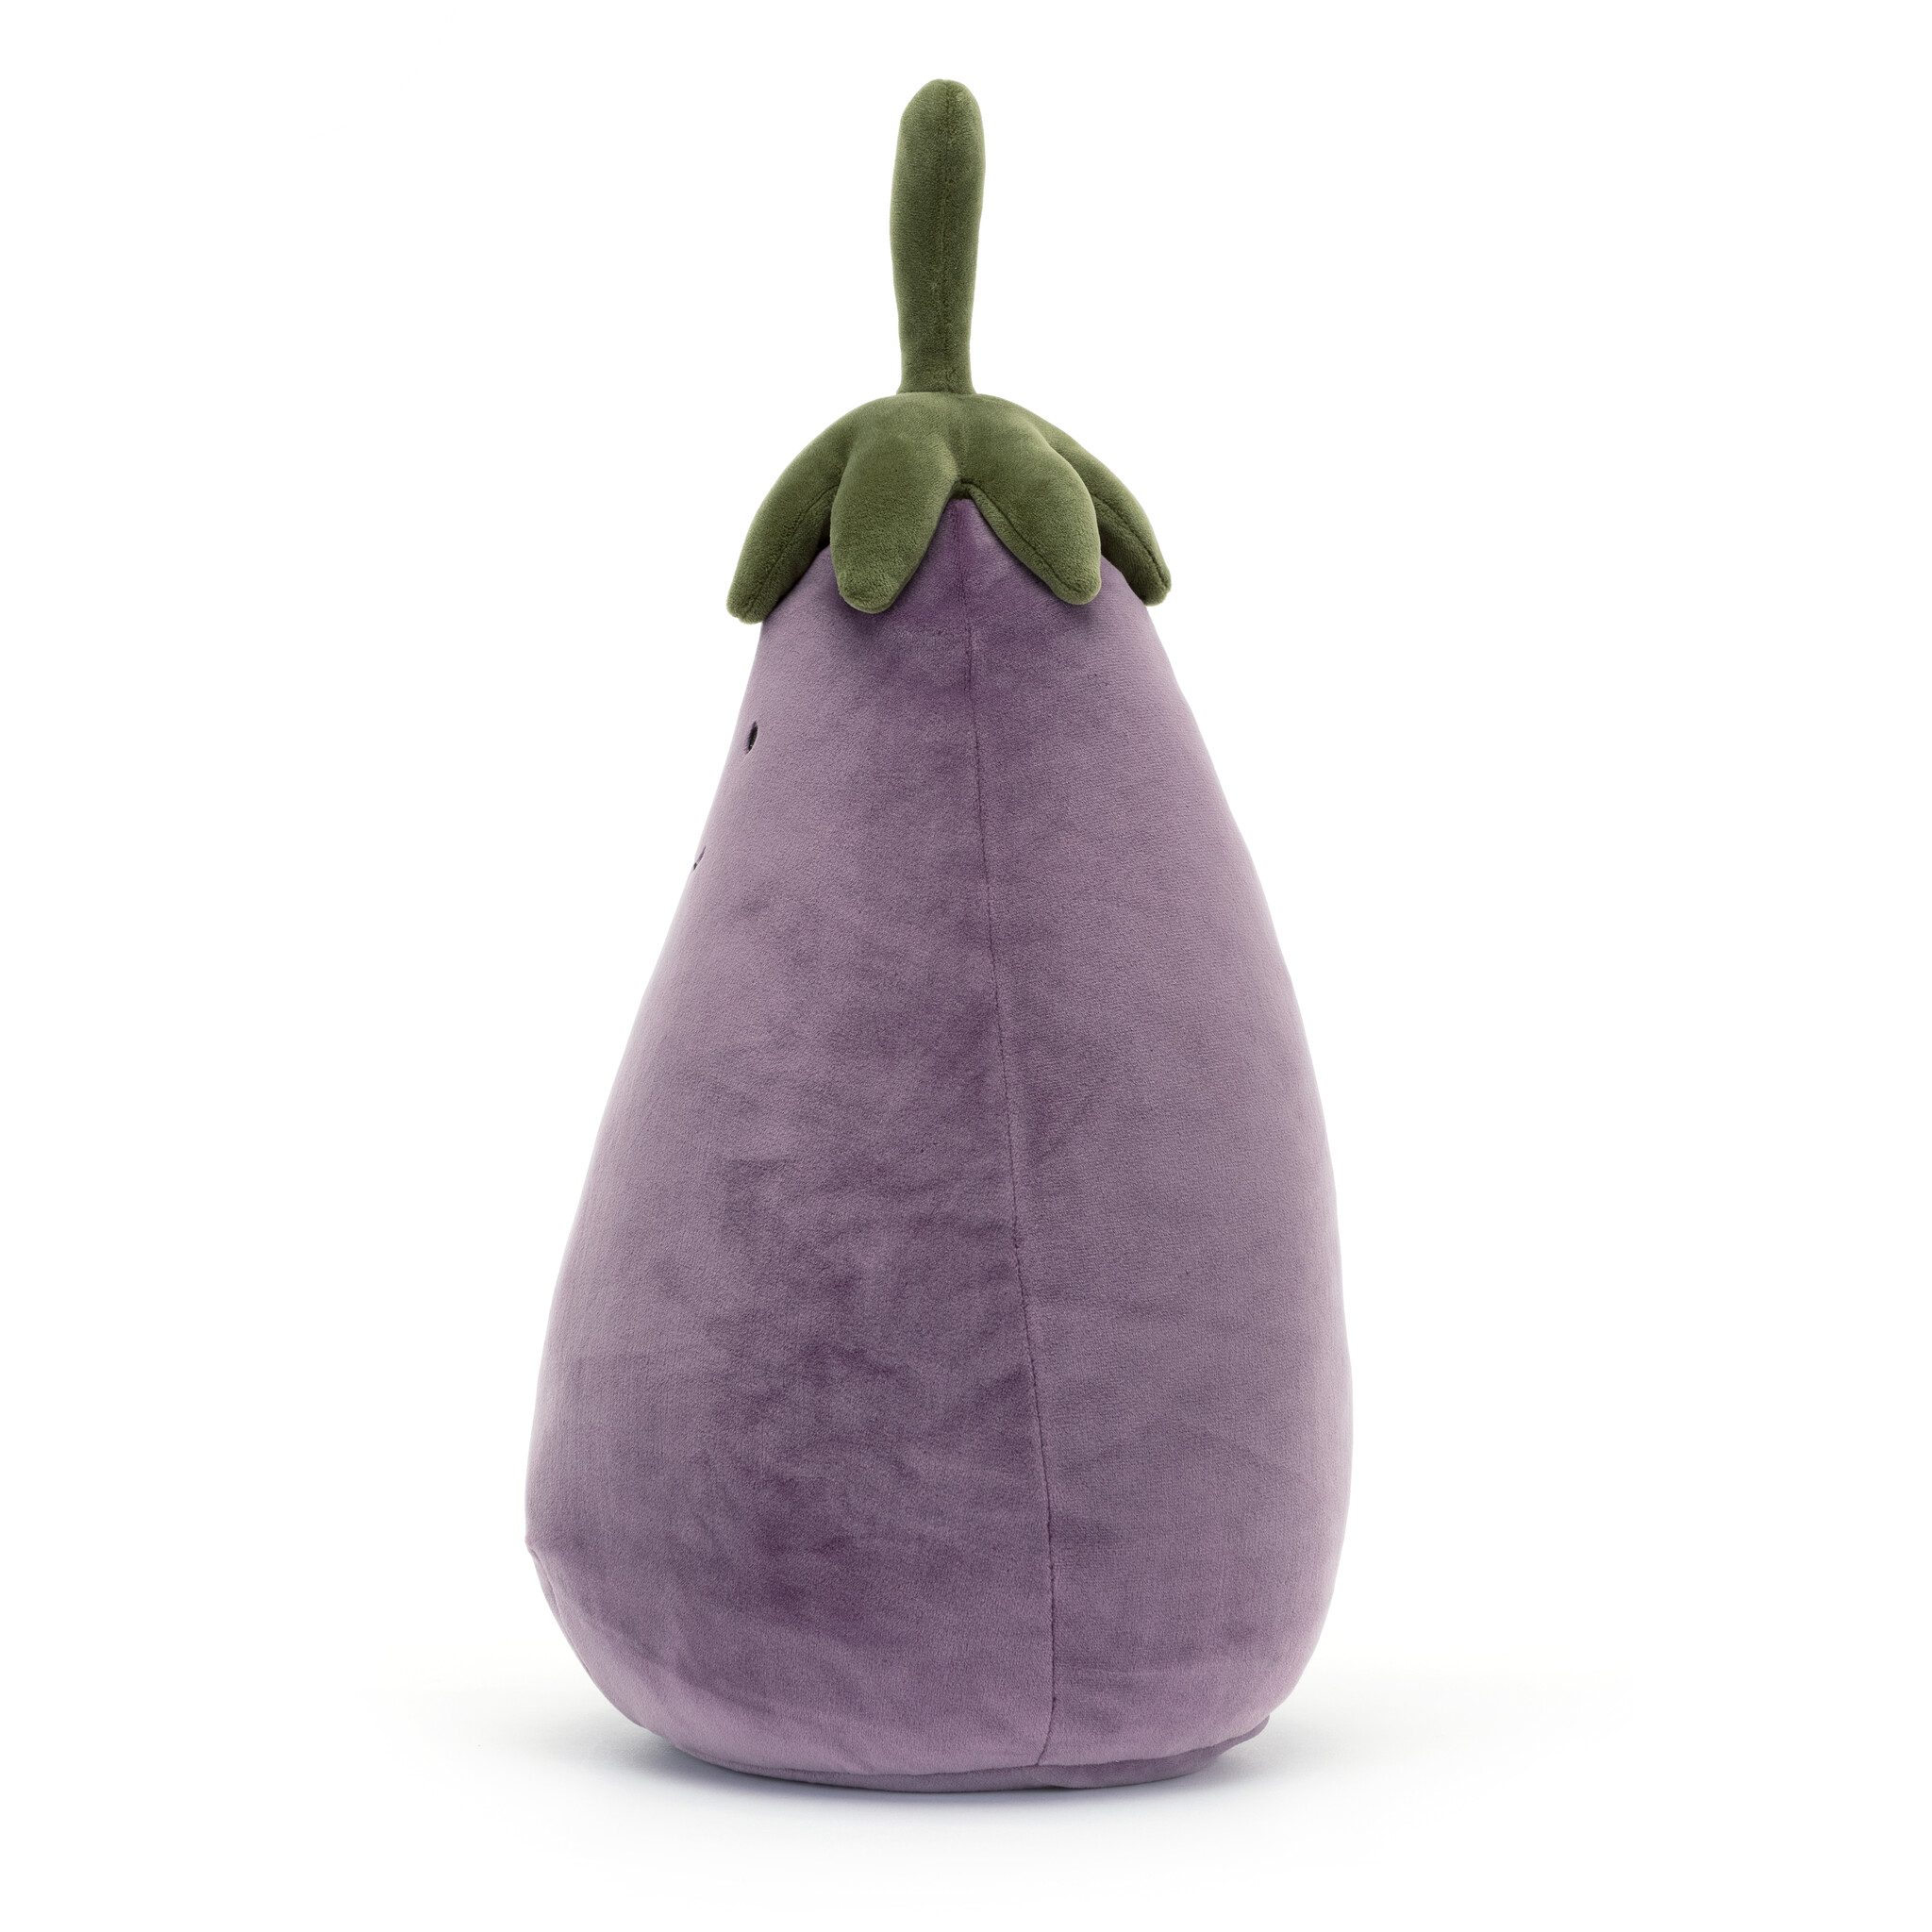 JellyCat JellyCat Vivacious Vegetable Eggplant Large